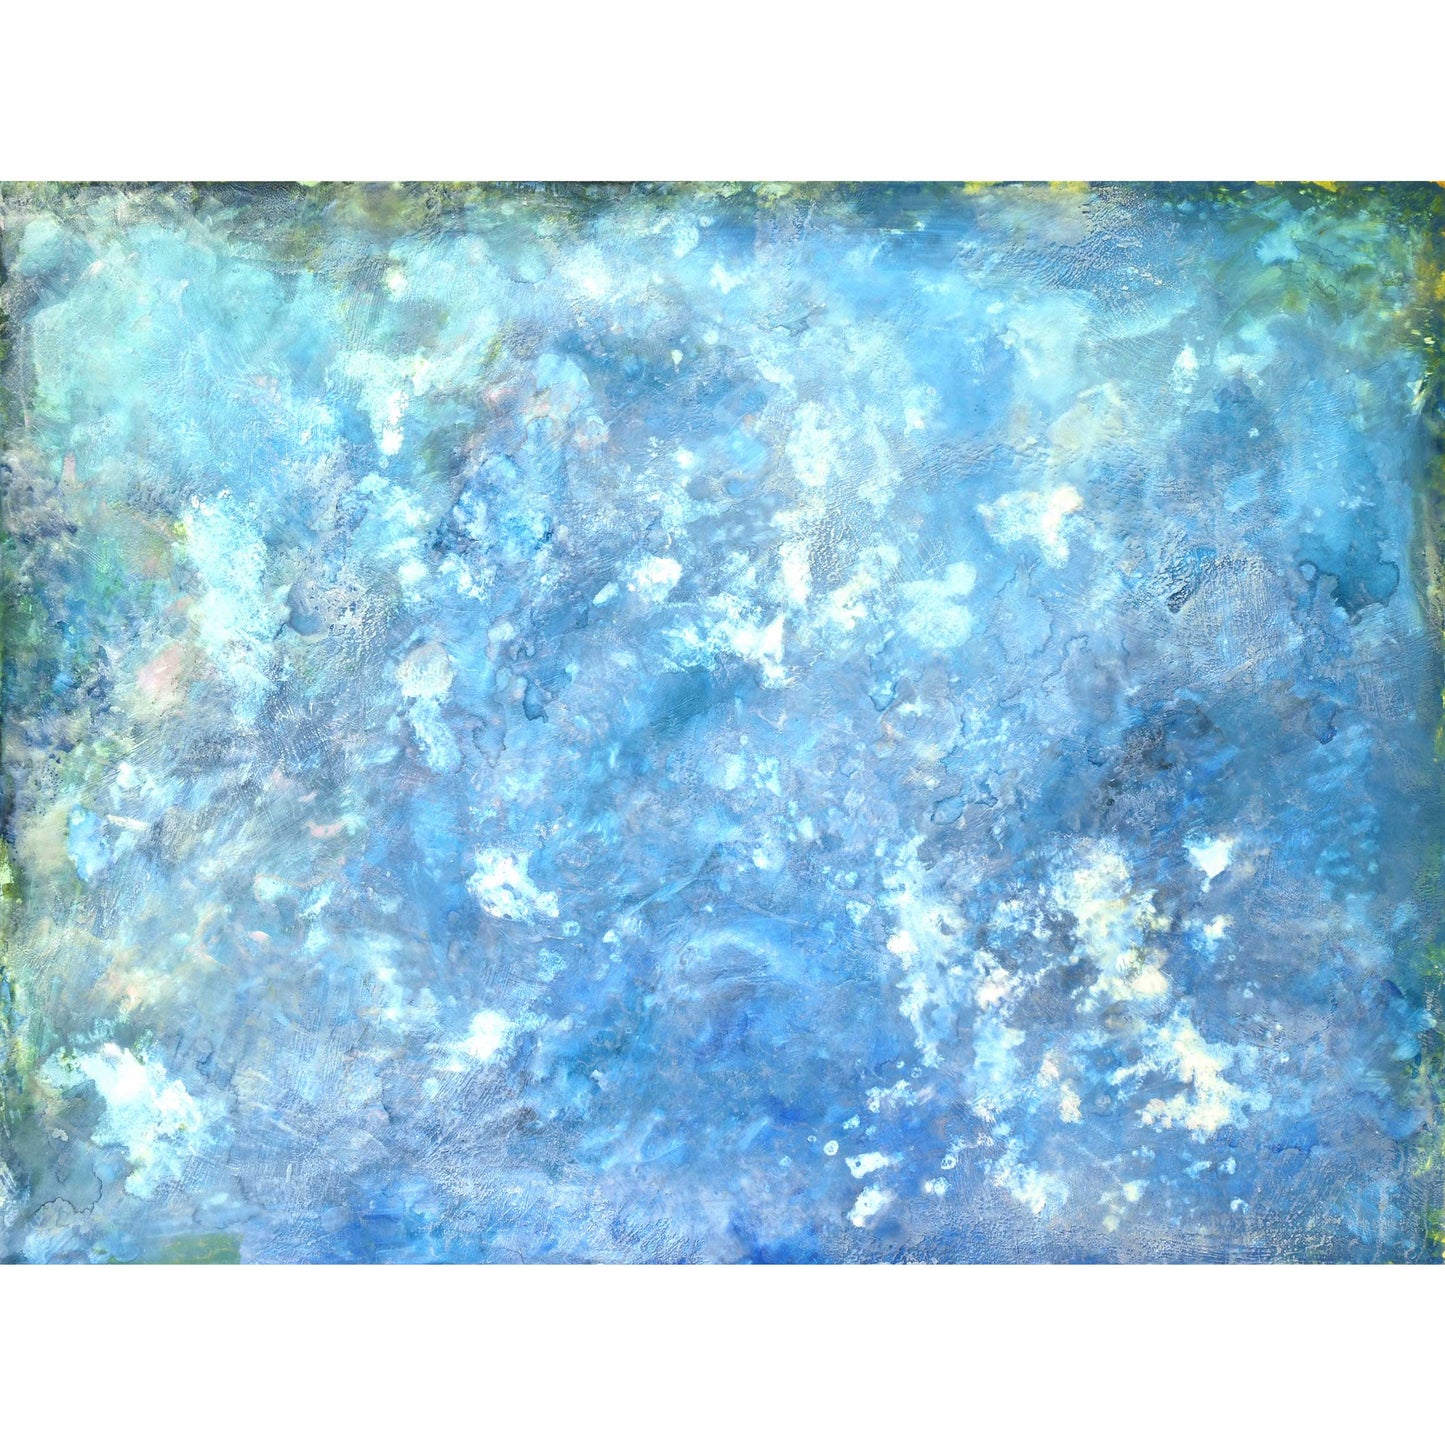 ENW-NB-001 "Sky and Ocean" #1 (18x24x1.5) Original encaustic abstract painting by Chizu Omori Art